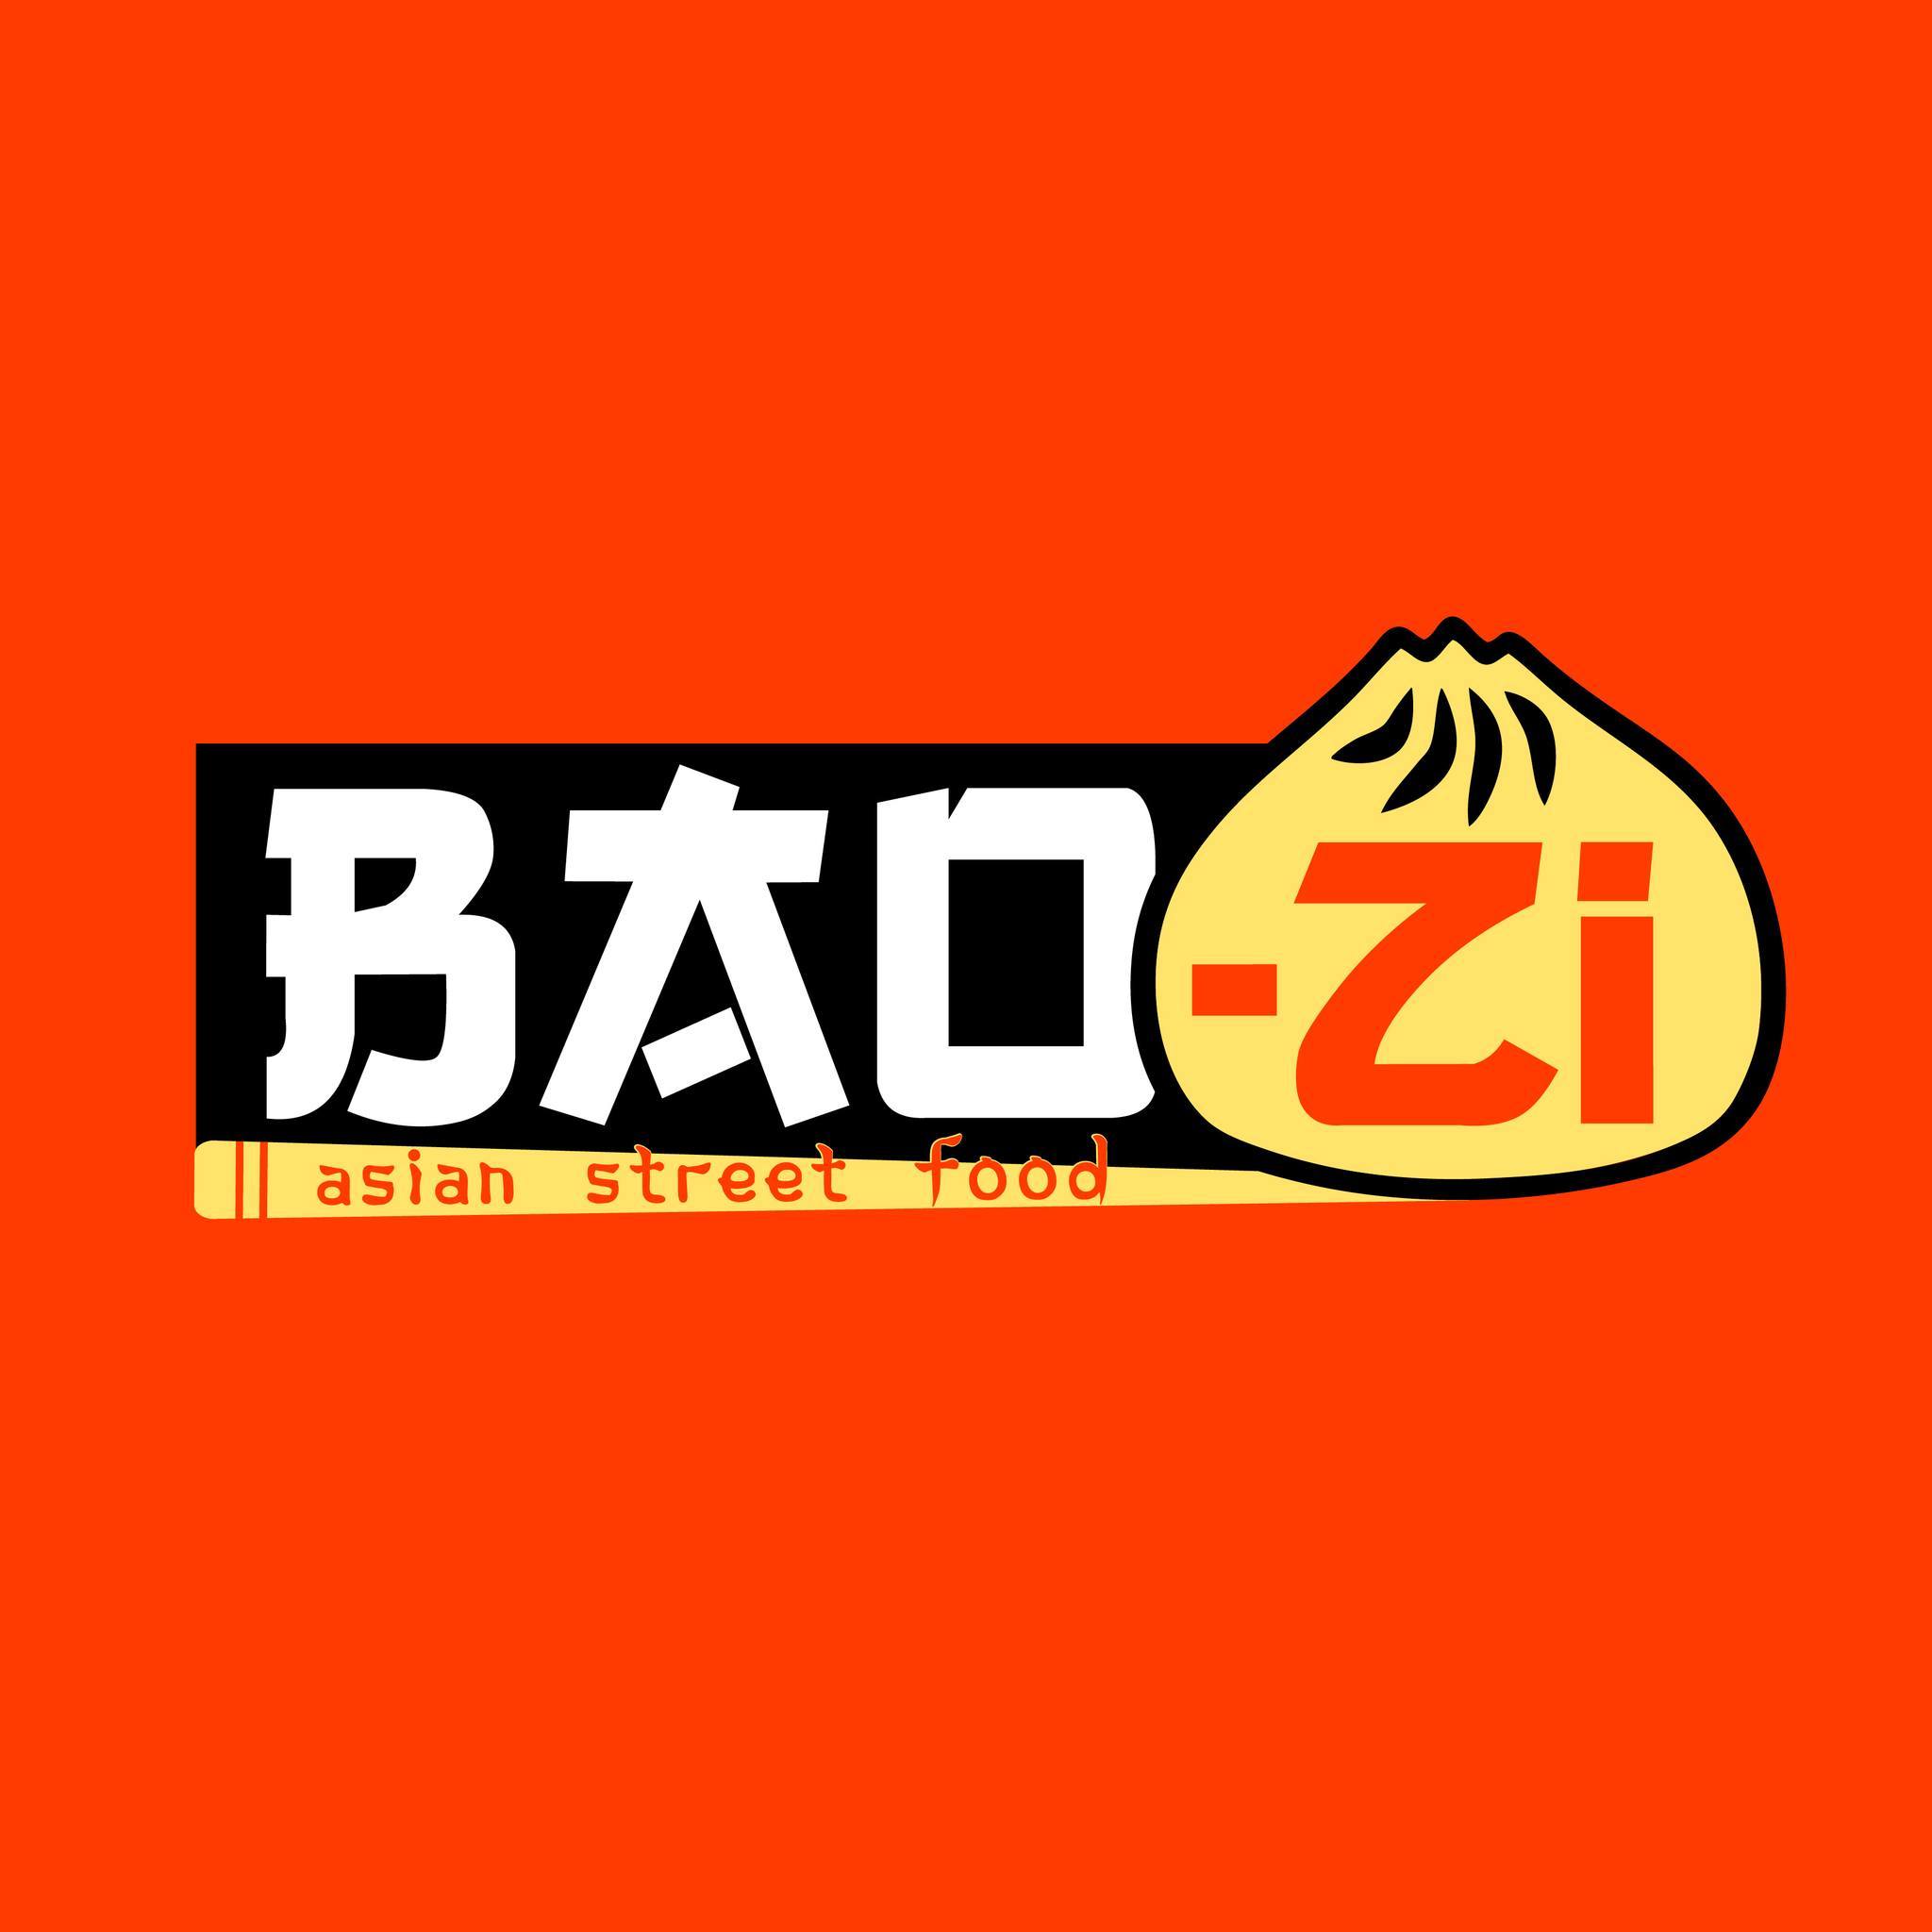 Bao-zi Asian Street Food Restaurante